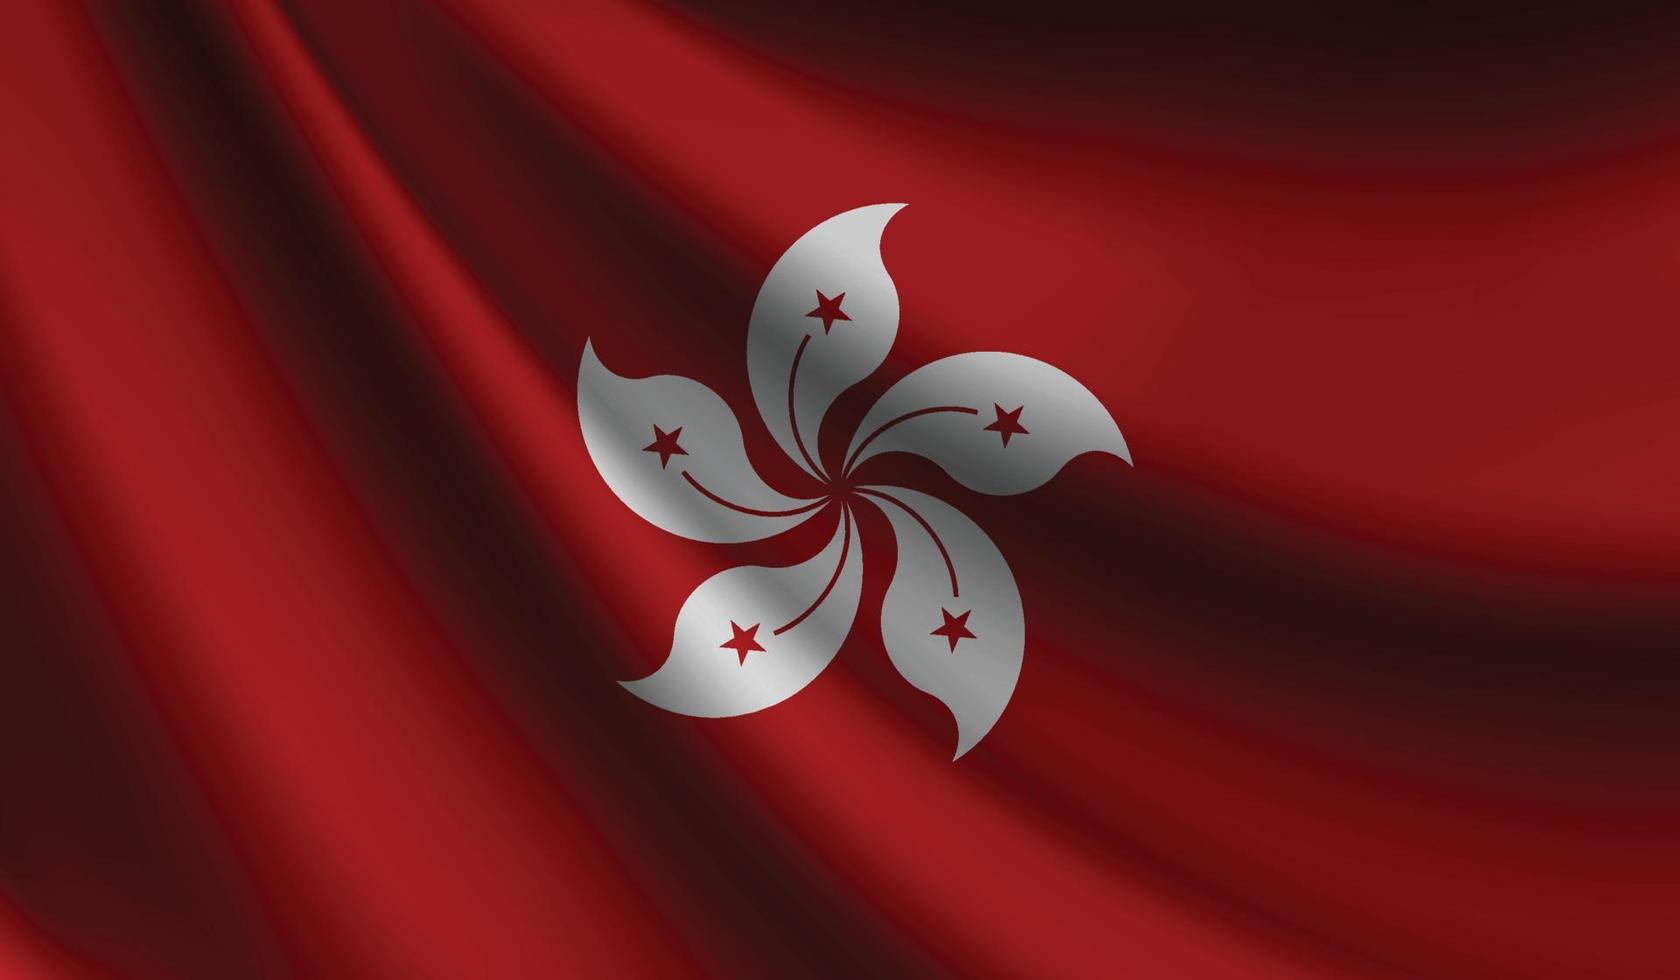 Hong Kong flag waving. Background for patriotic and national design vector